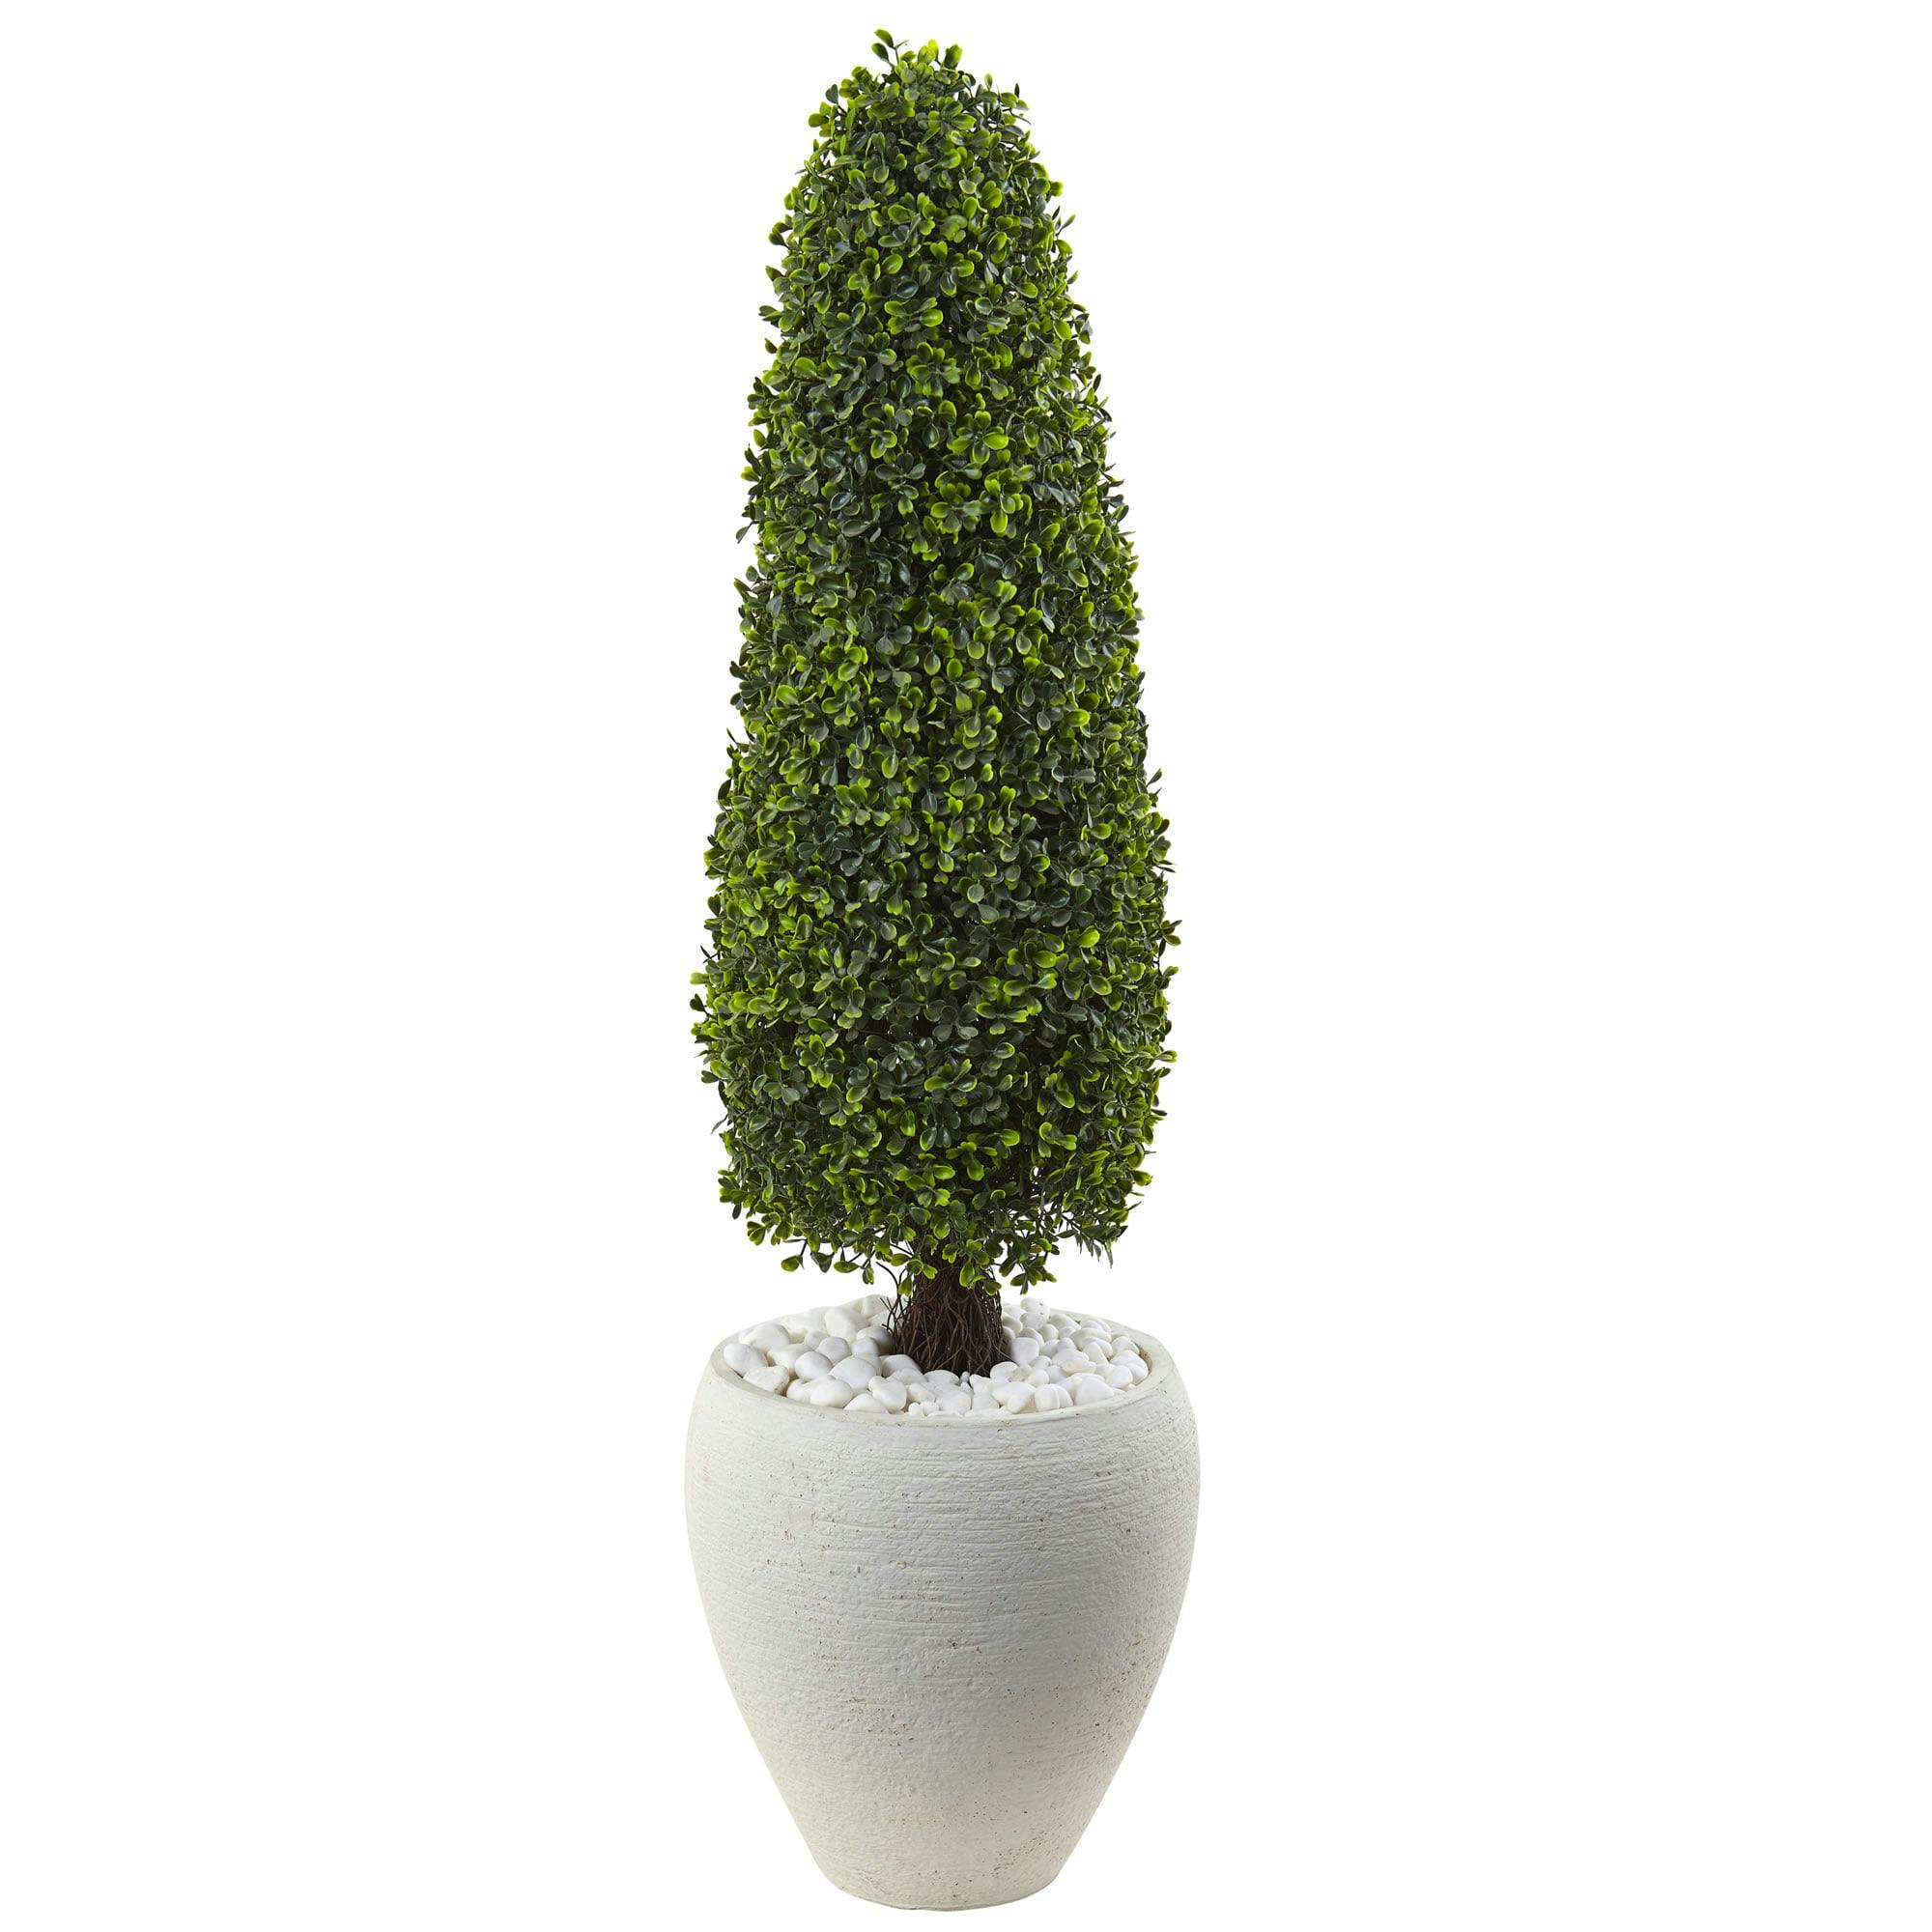 Elegant Outdoor Boxwood Topiary in Textured White Planter, 42"